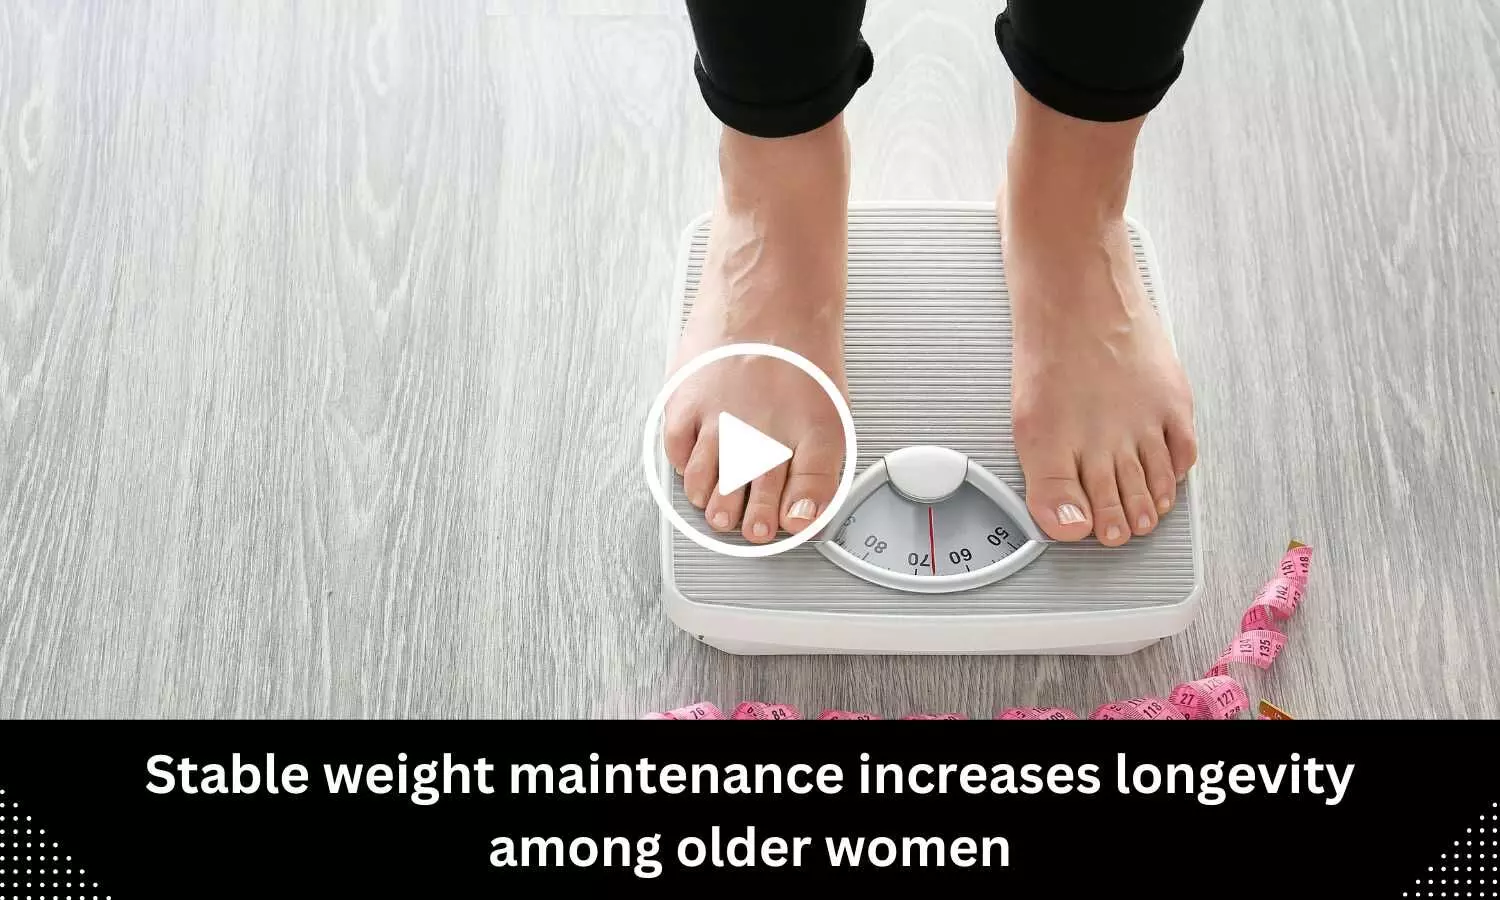 Stable weight maintenance increases longevity among older women